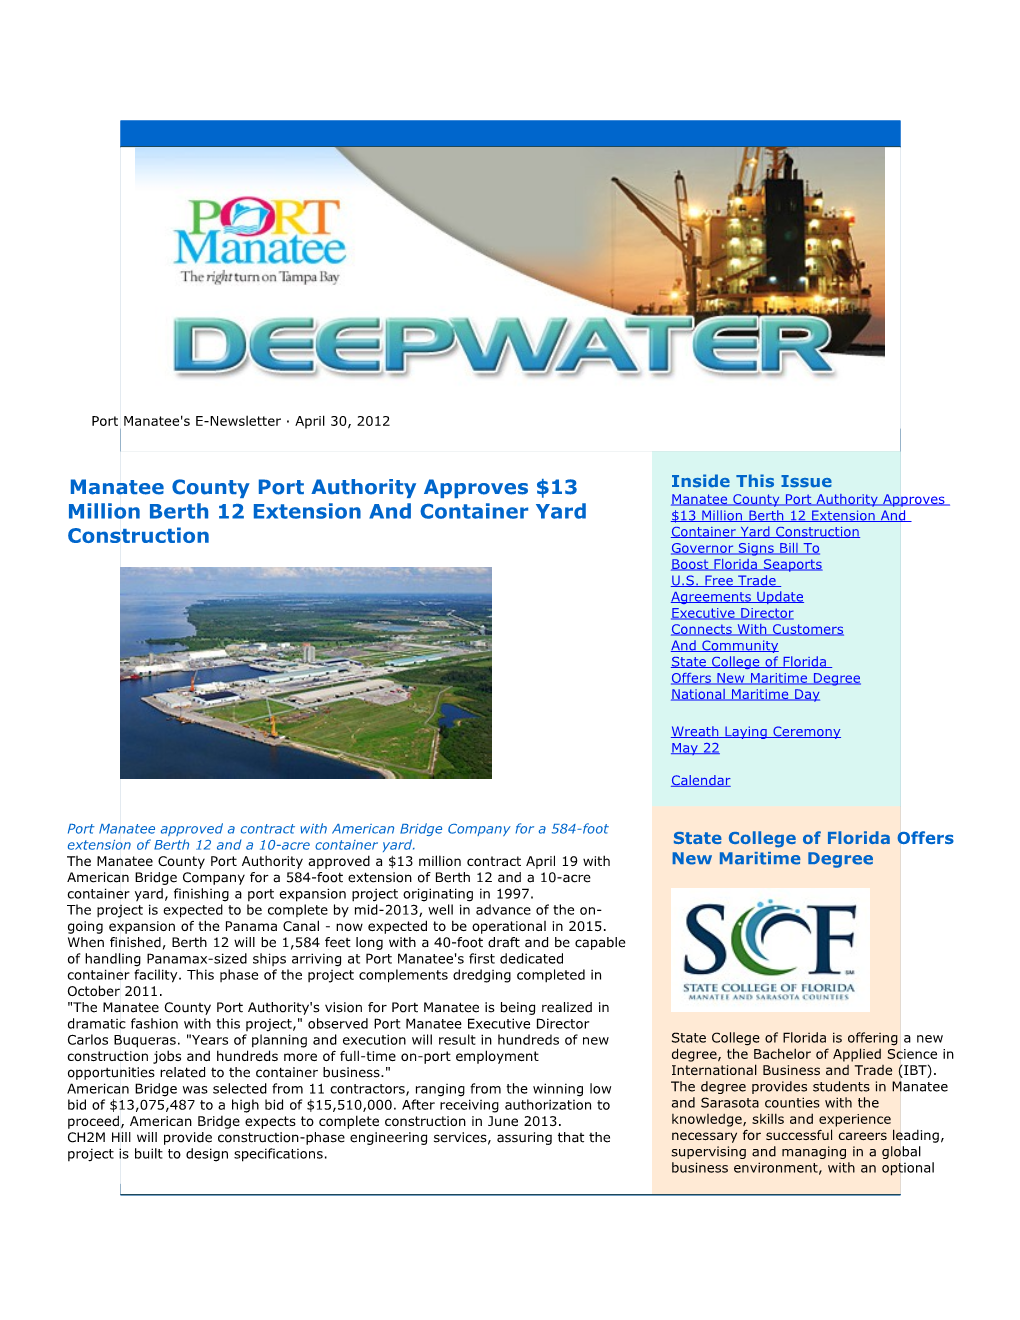 Increases Minimum Funding for the Florida Seaport Transportation Economic Development (FSTED)